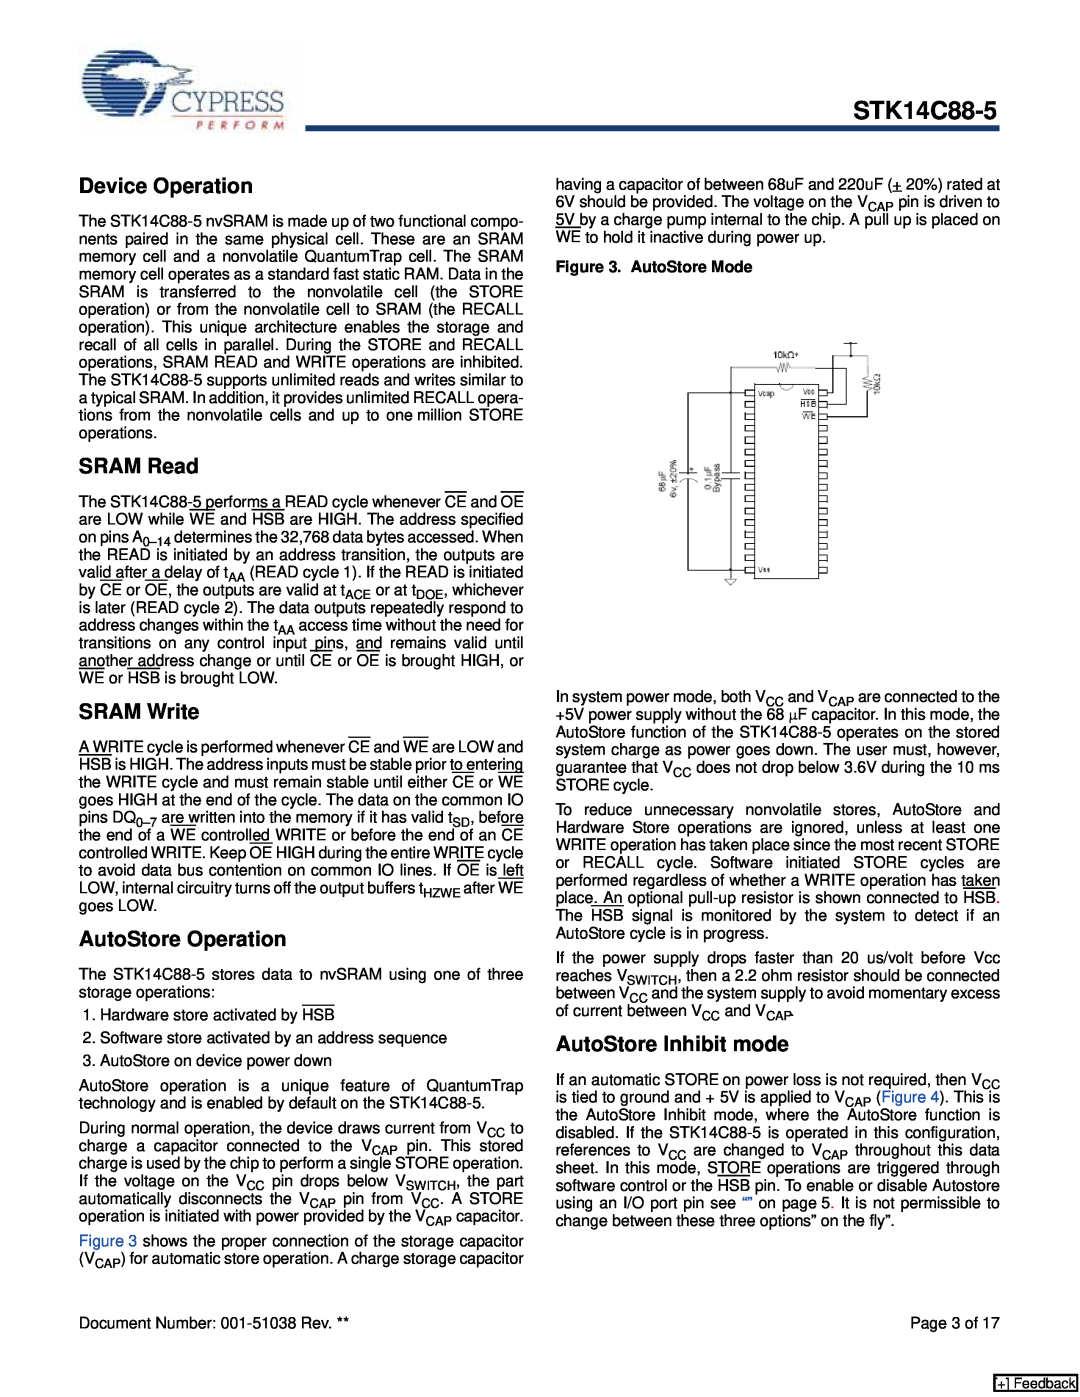 Cypress STK14C88-5 manual Device Operation, SRAM Read, SRAM Write, AutoStore Operation, AutoStore Inhibit mode 